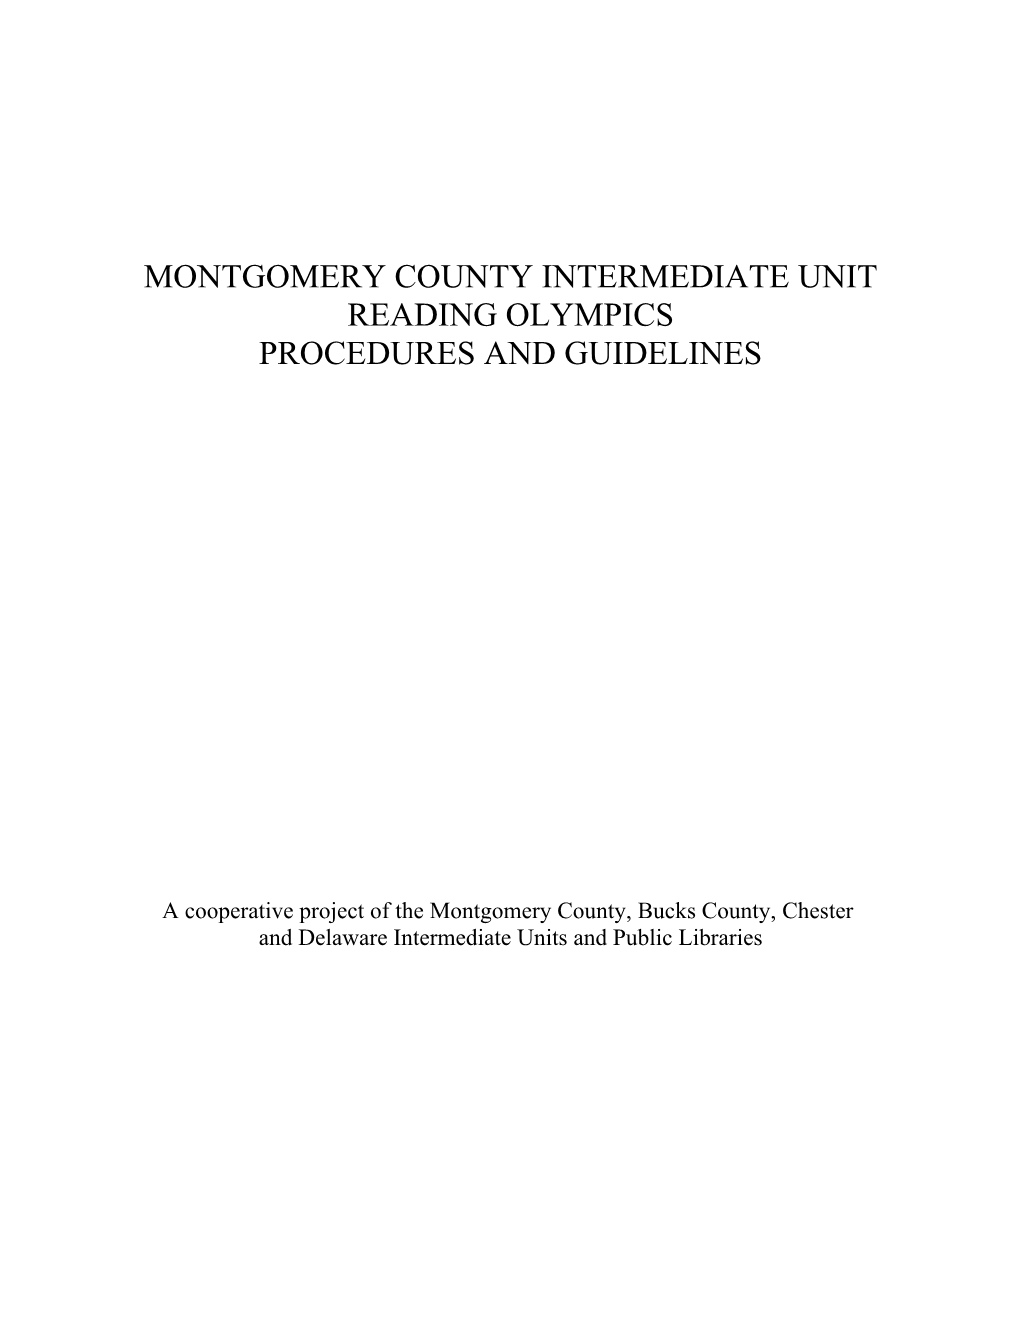 Montgomery County Intermediate Unit